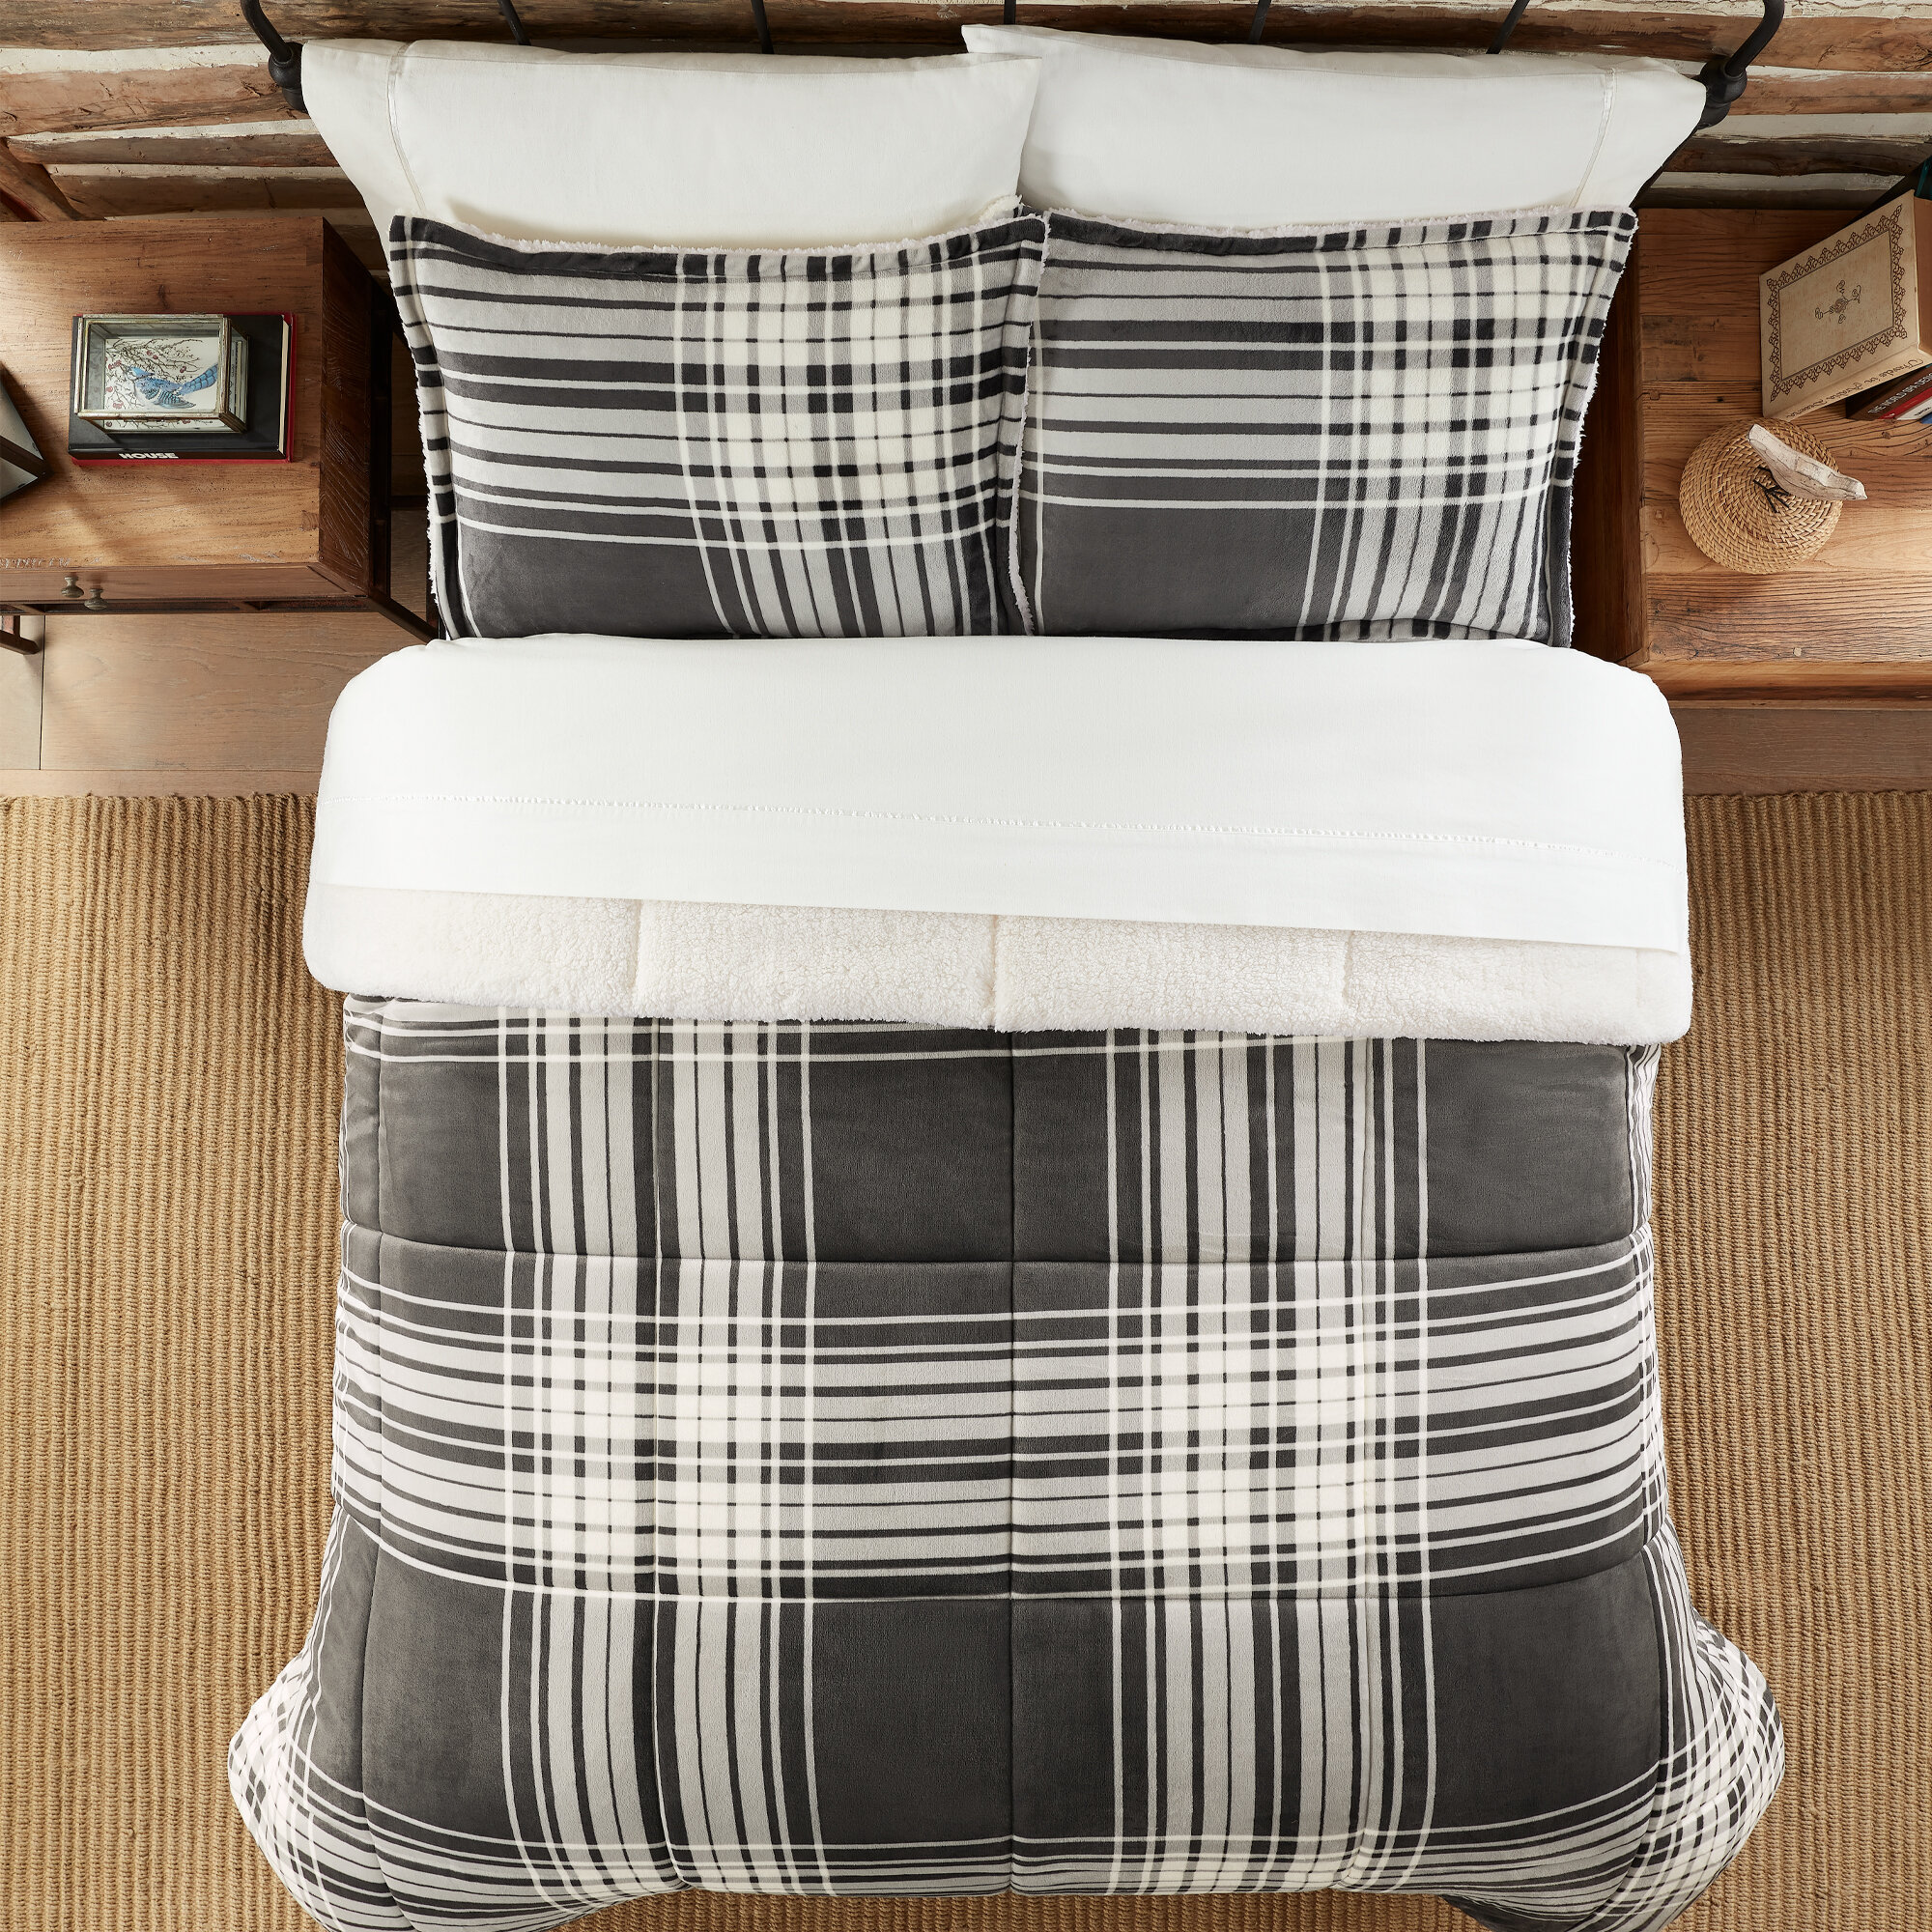 Ceiling Living Blanket Cuddly Blanket Microfibre Sofa Blanket Soft Bedspread Plaid Pattern 